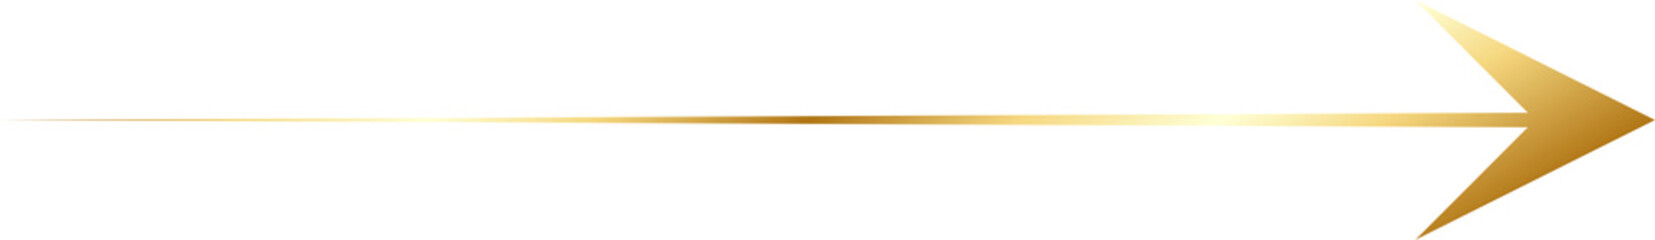 Thin Gold Arrow Design Element